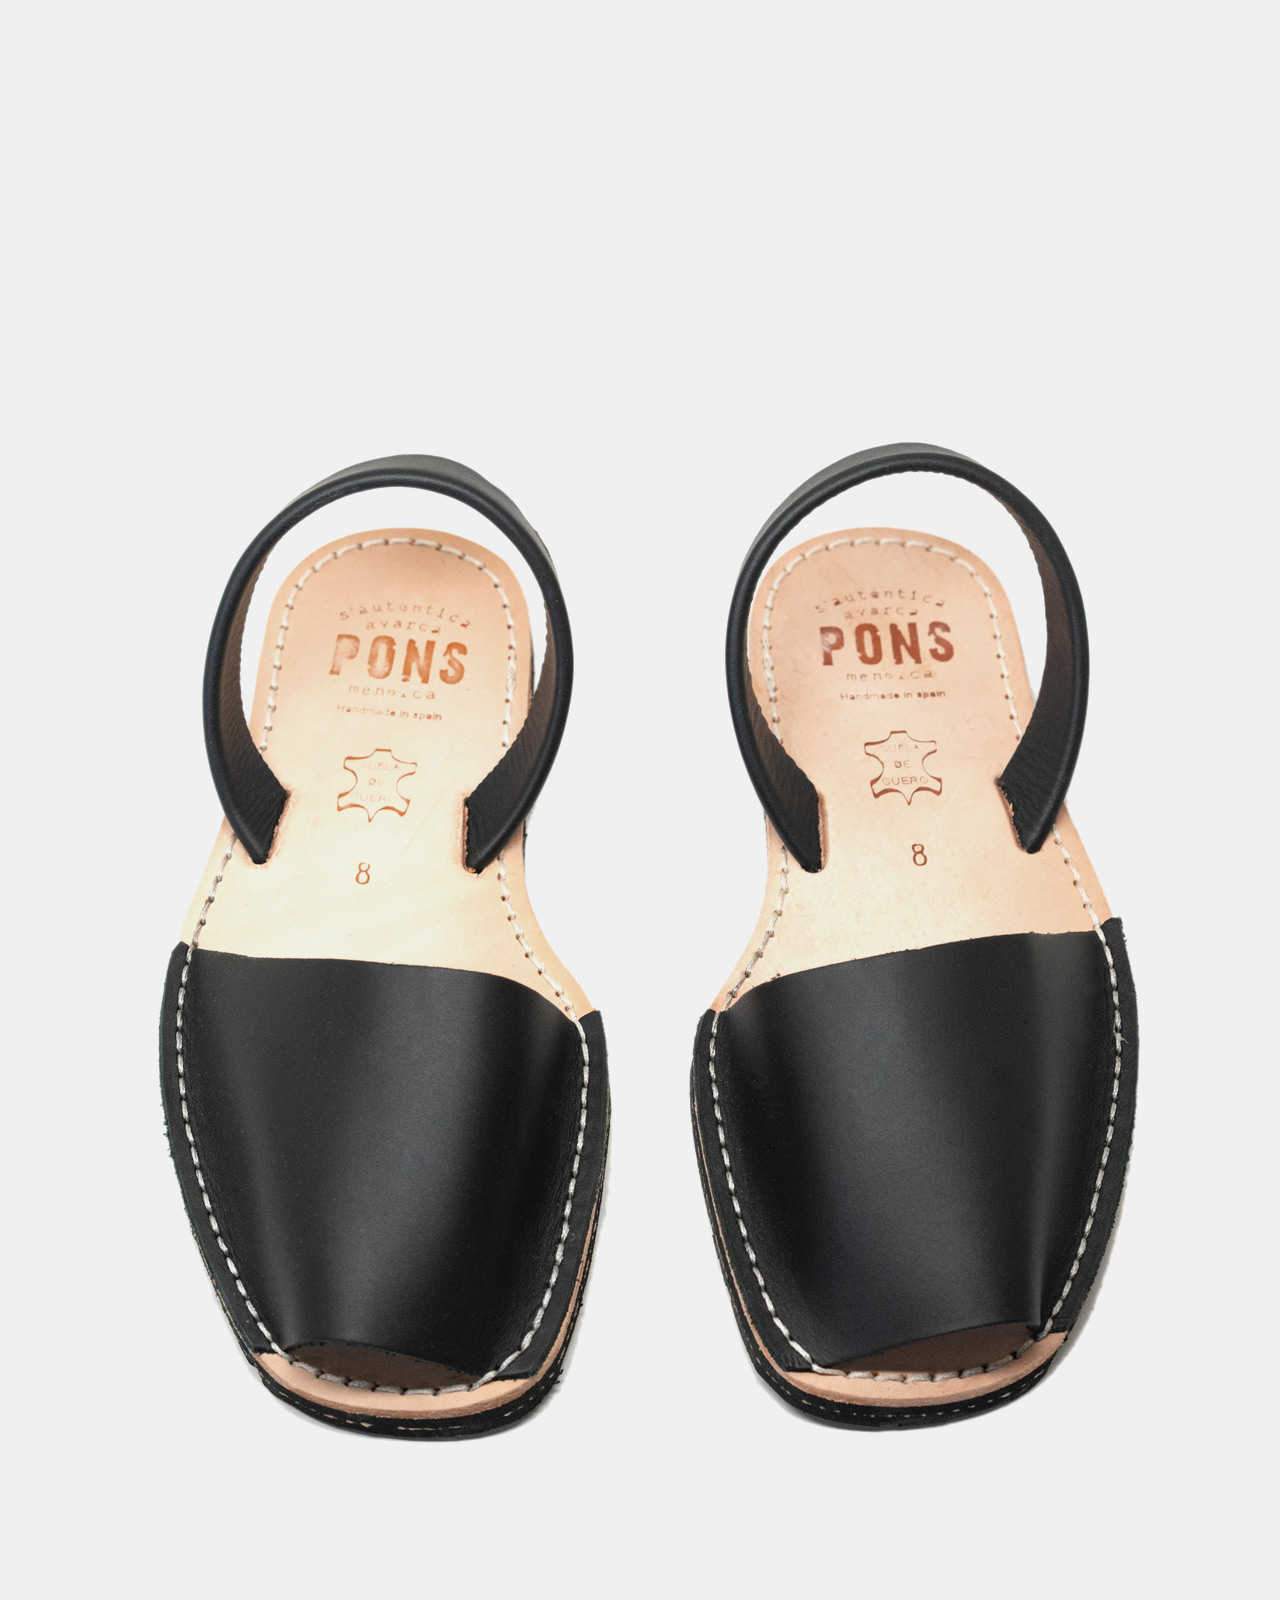 Pons eCo-Classic Black Avarca Sandals for Women | Avarcas USA